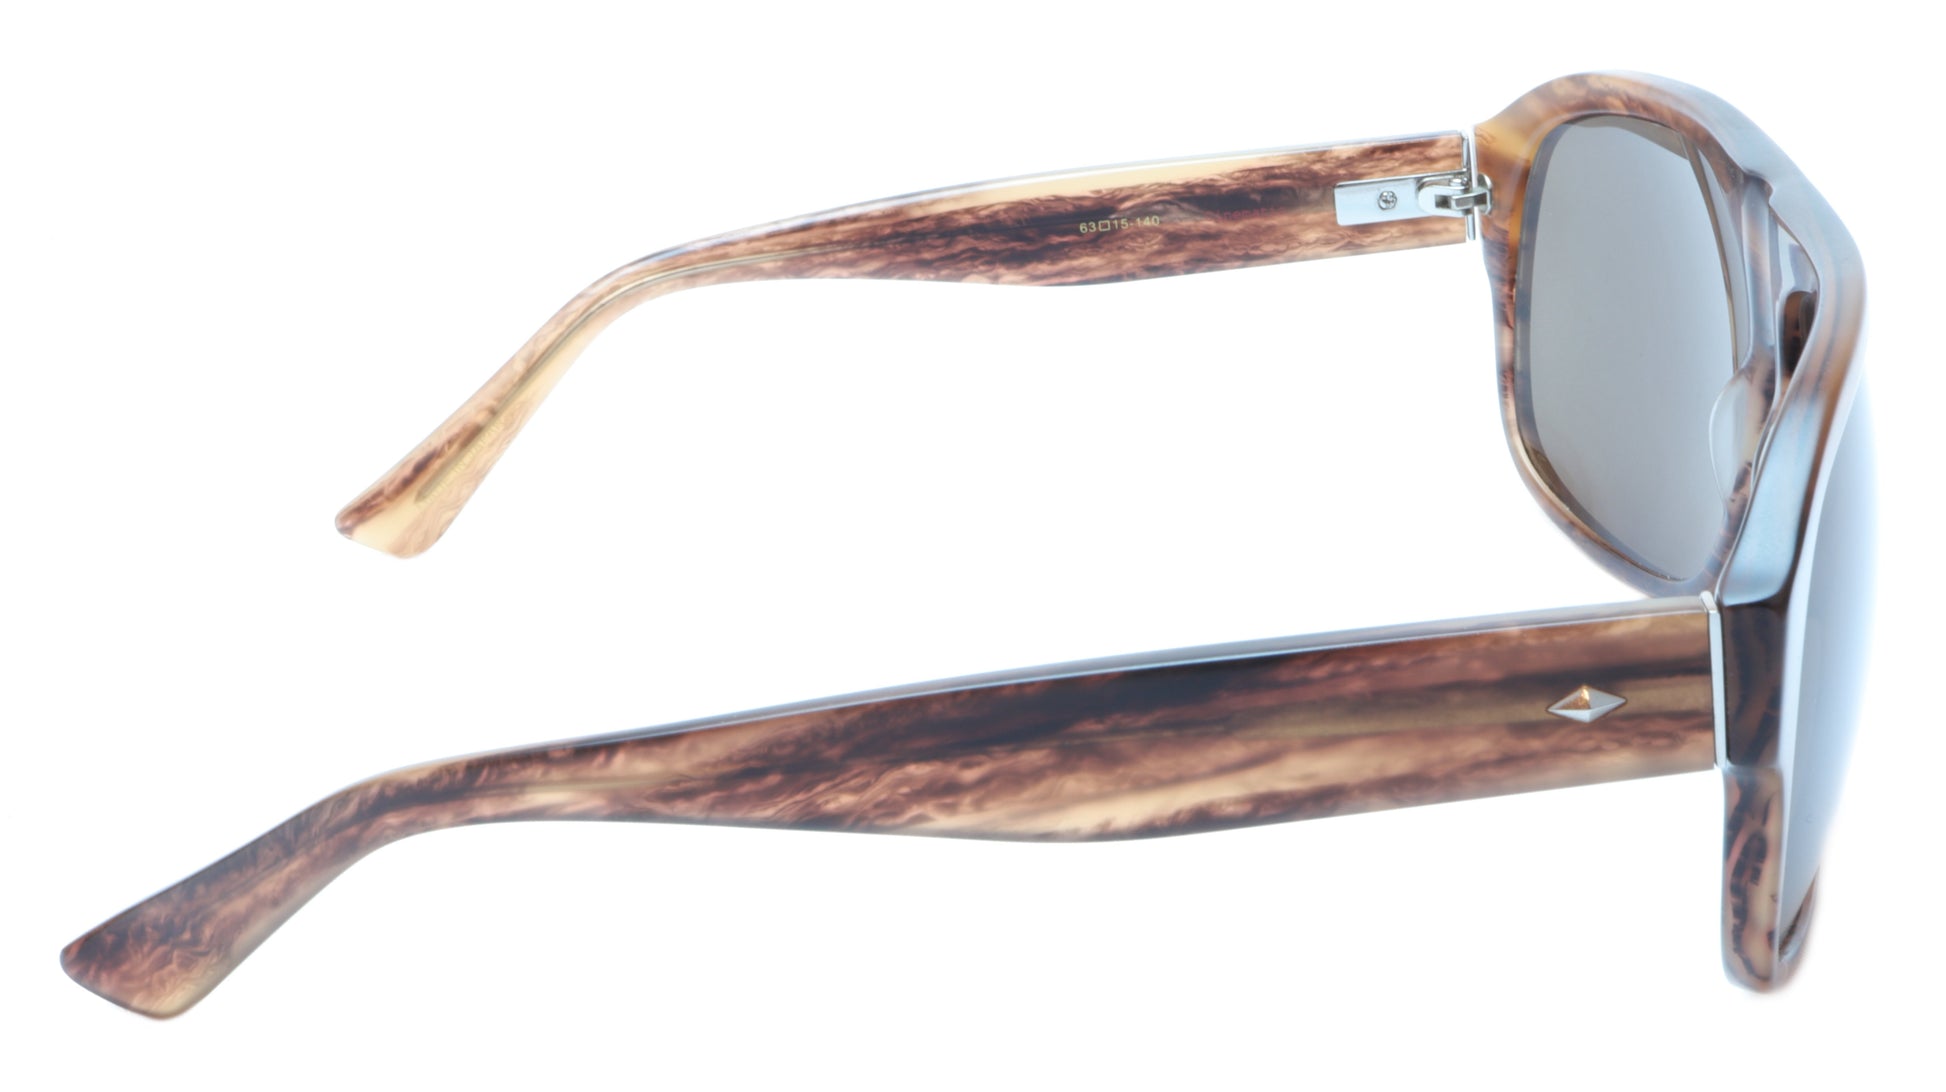 Sama Sunglasses Quentin Brown Tortoise Polarized Lenses Acetate Japan 63-15-140 - Frame Bay